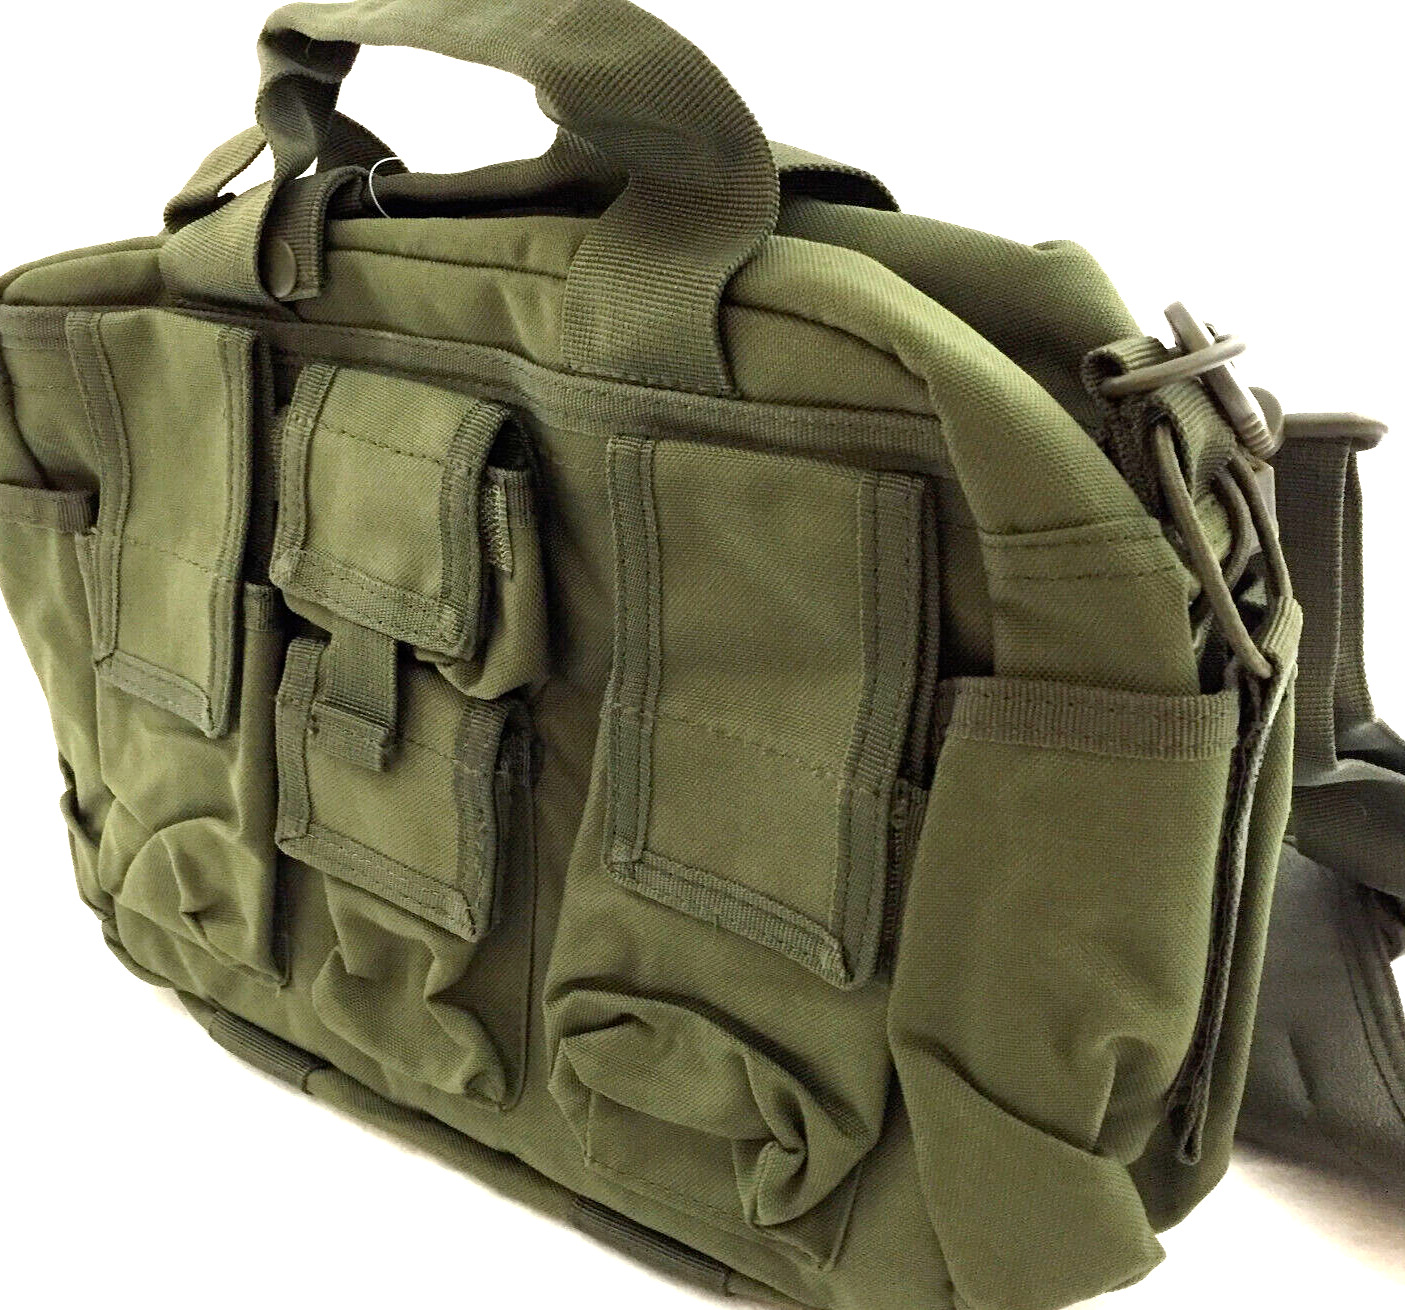 Condor Outdoor Tactical Response Bag 136-001 Green With Shoulder Strap NEW